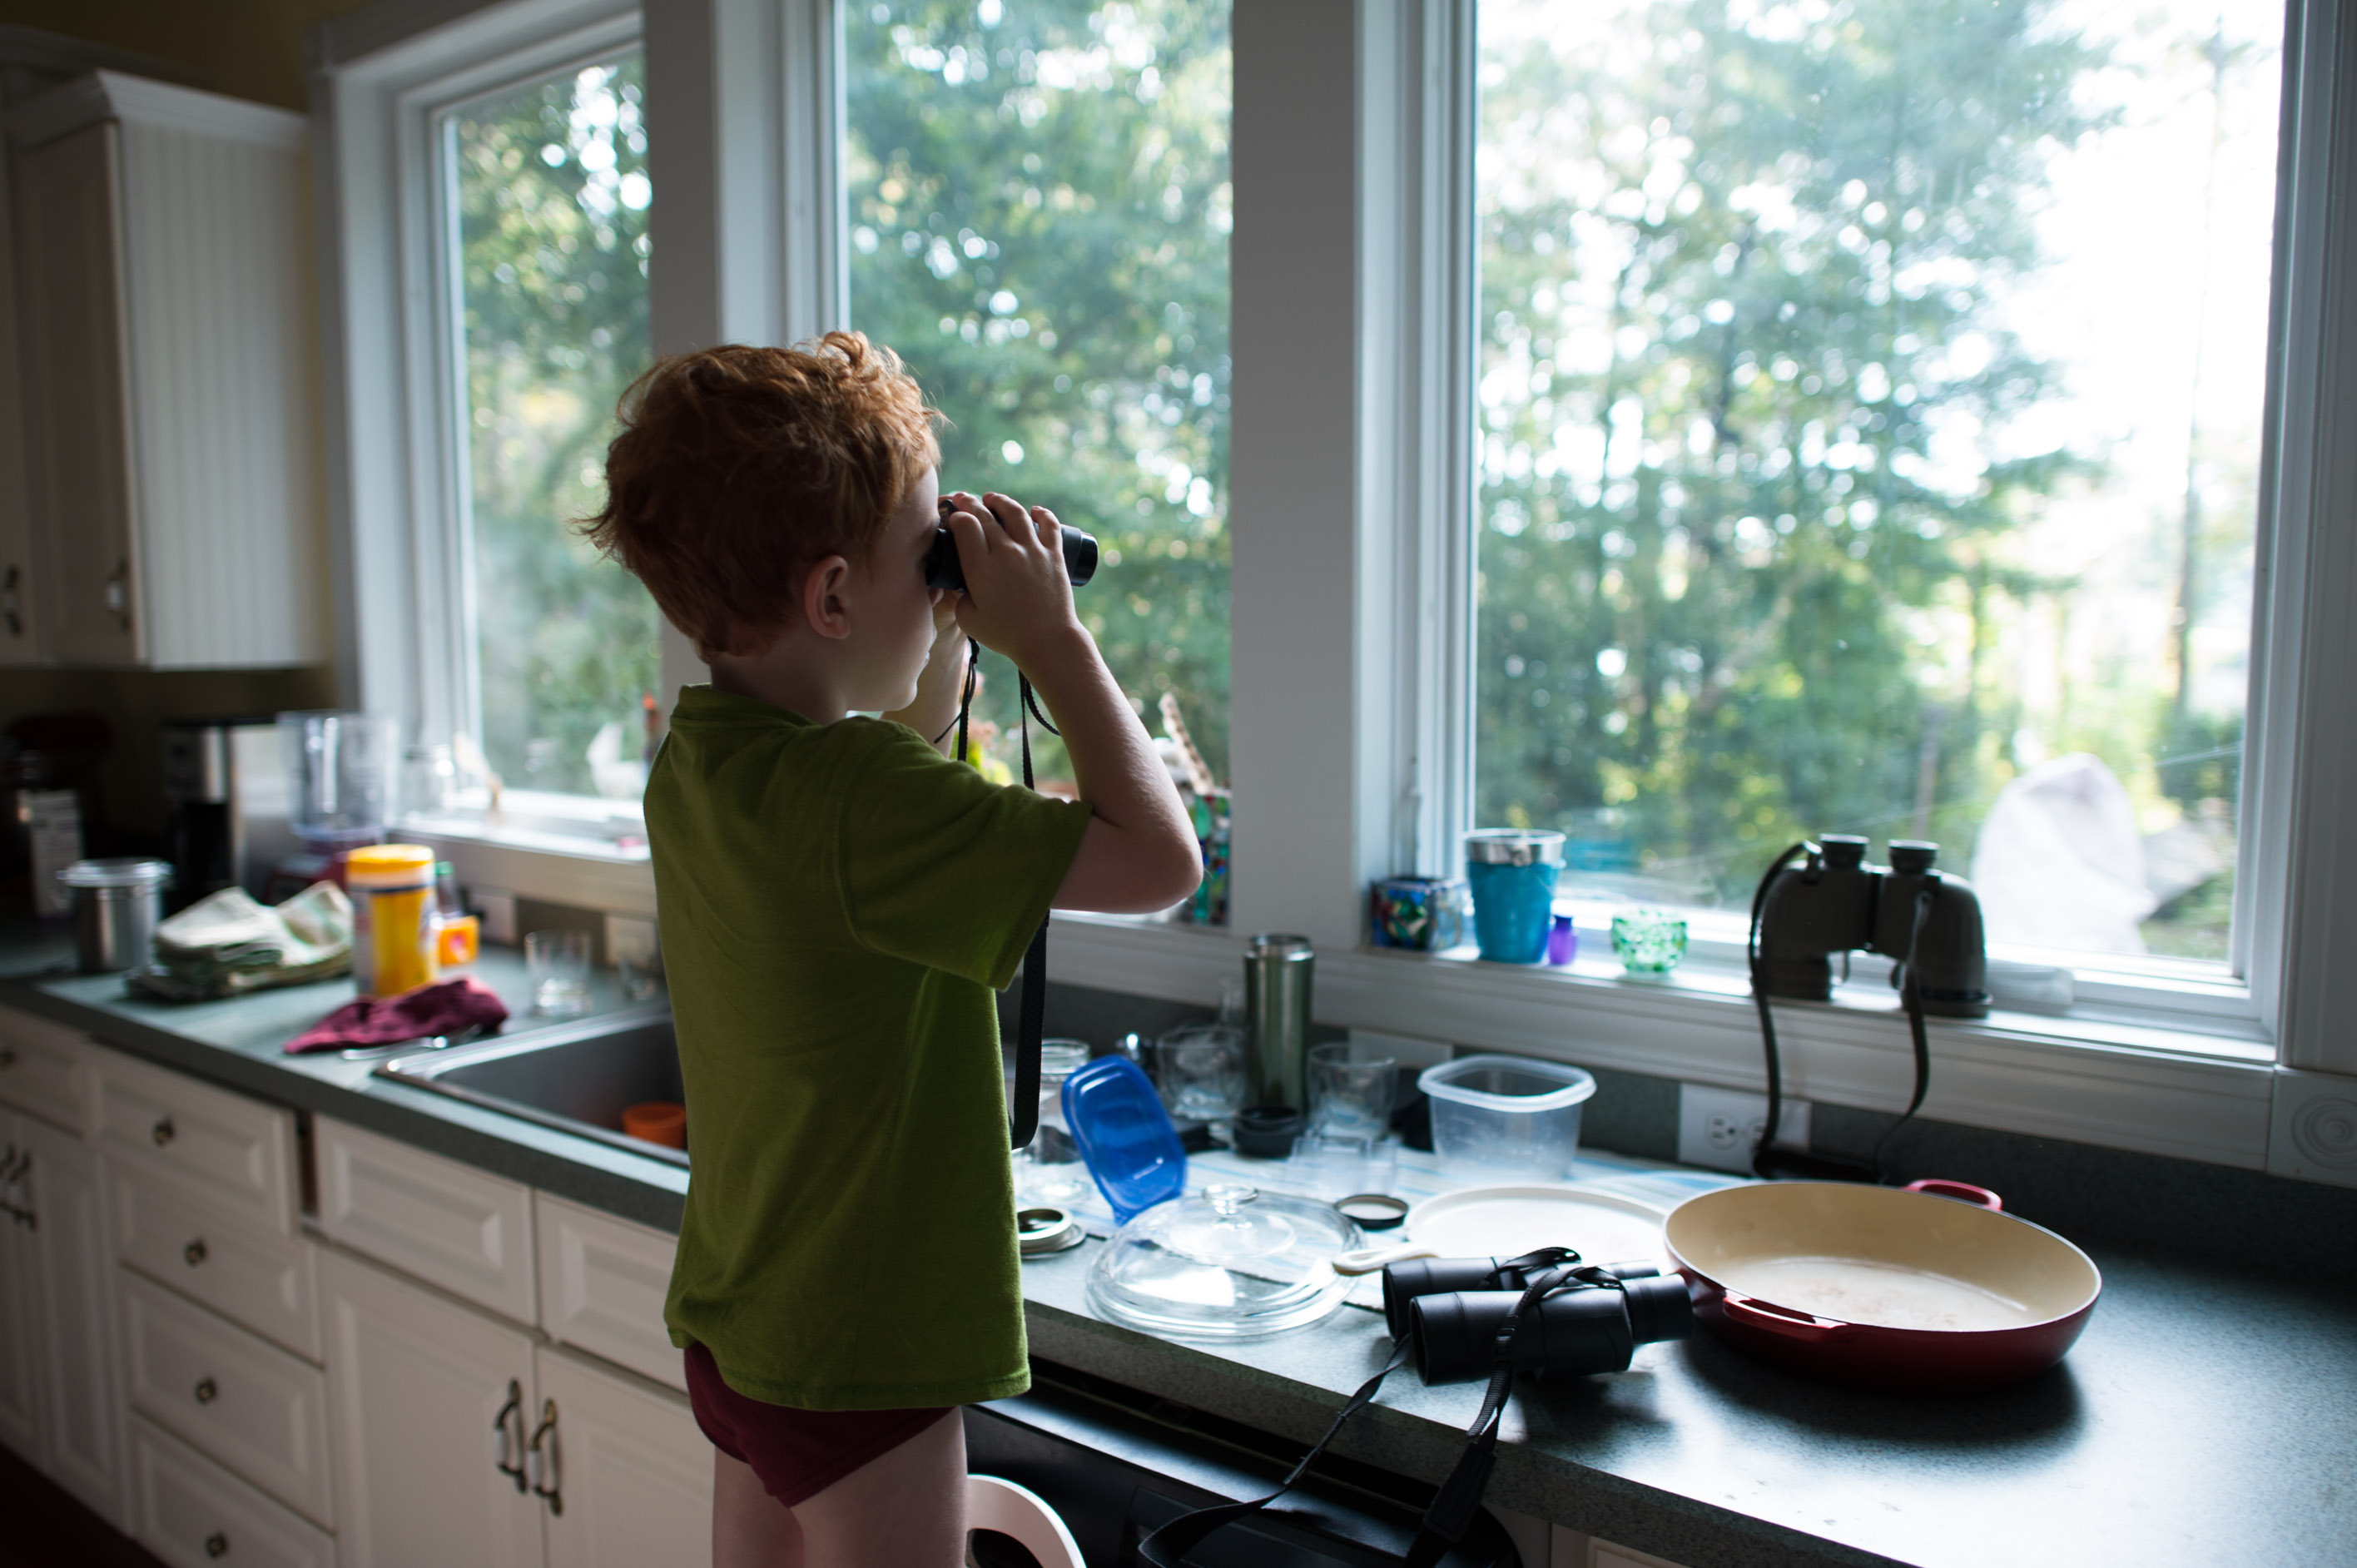 boy looks our window with binoculars - family documentary photography